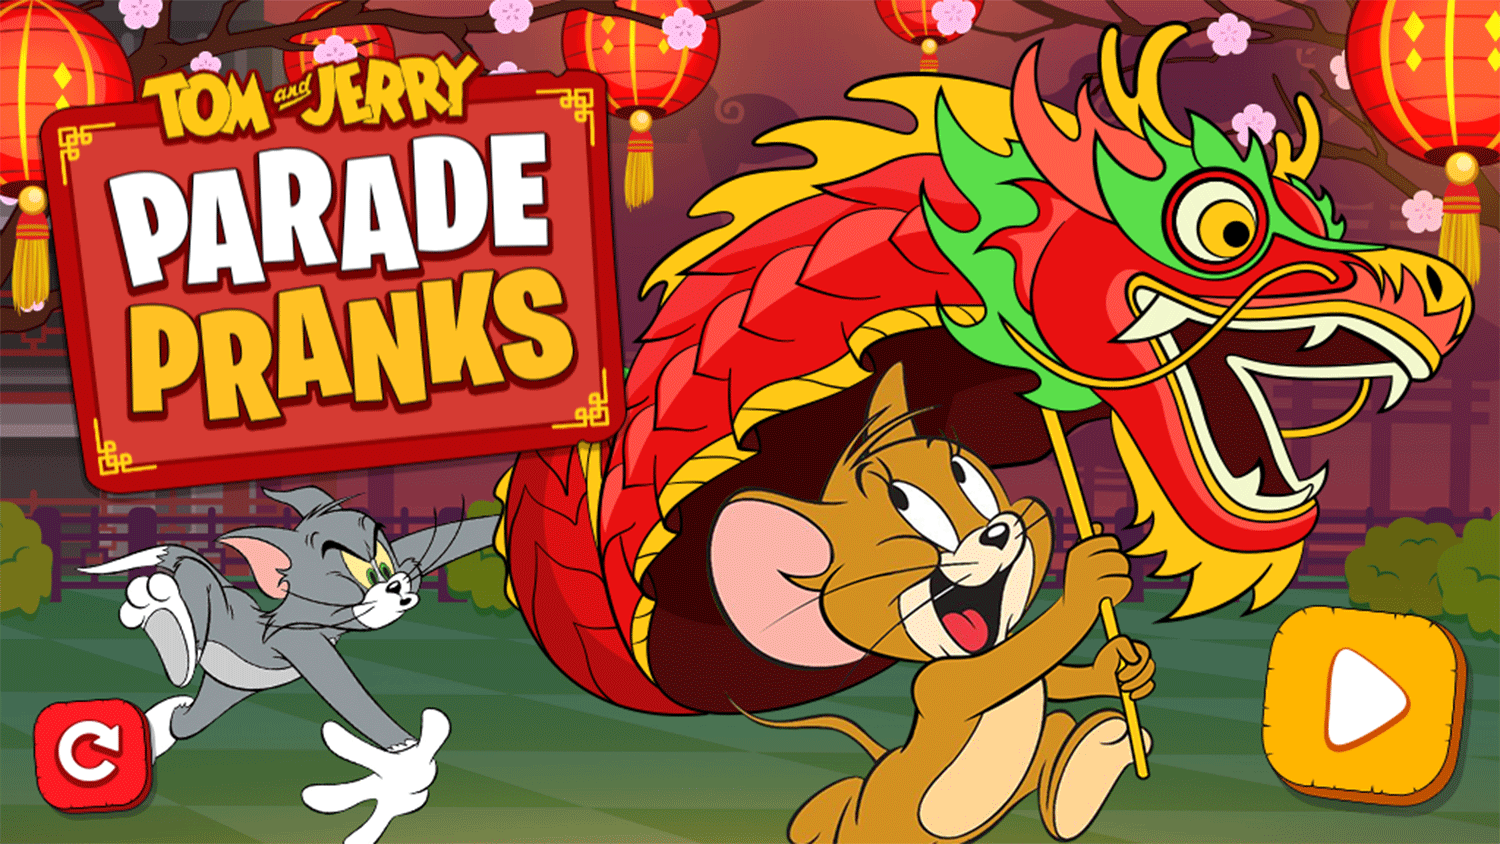 Tom and Jerry Parade Pranks Welcome Screen Screenshots.